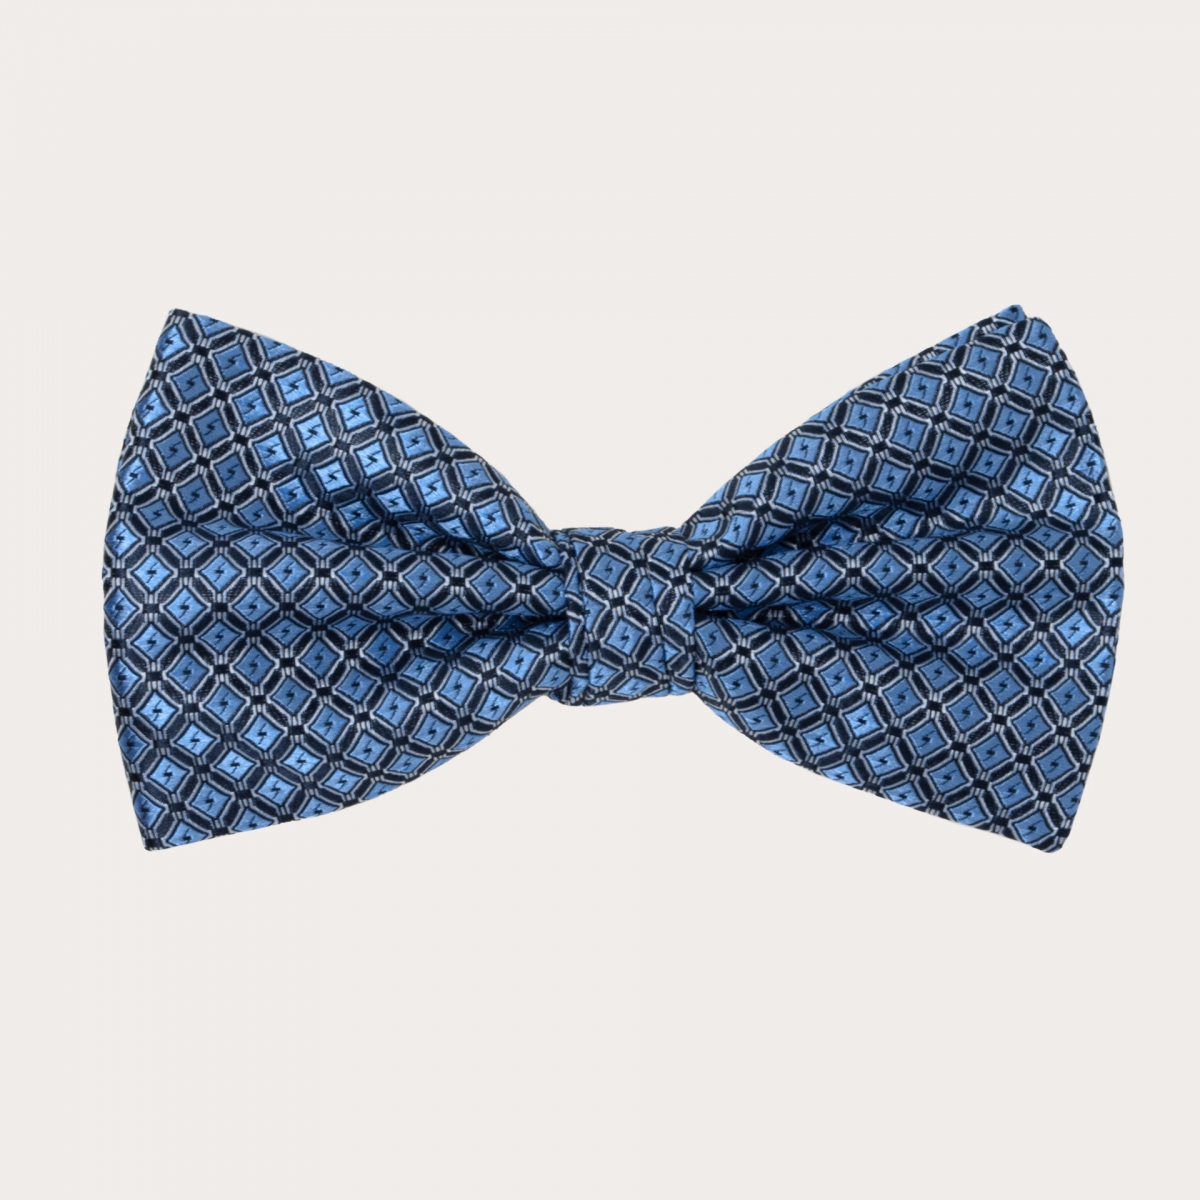 Silk Pre-tied Bow tie, square blue